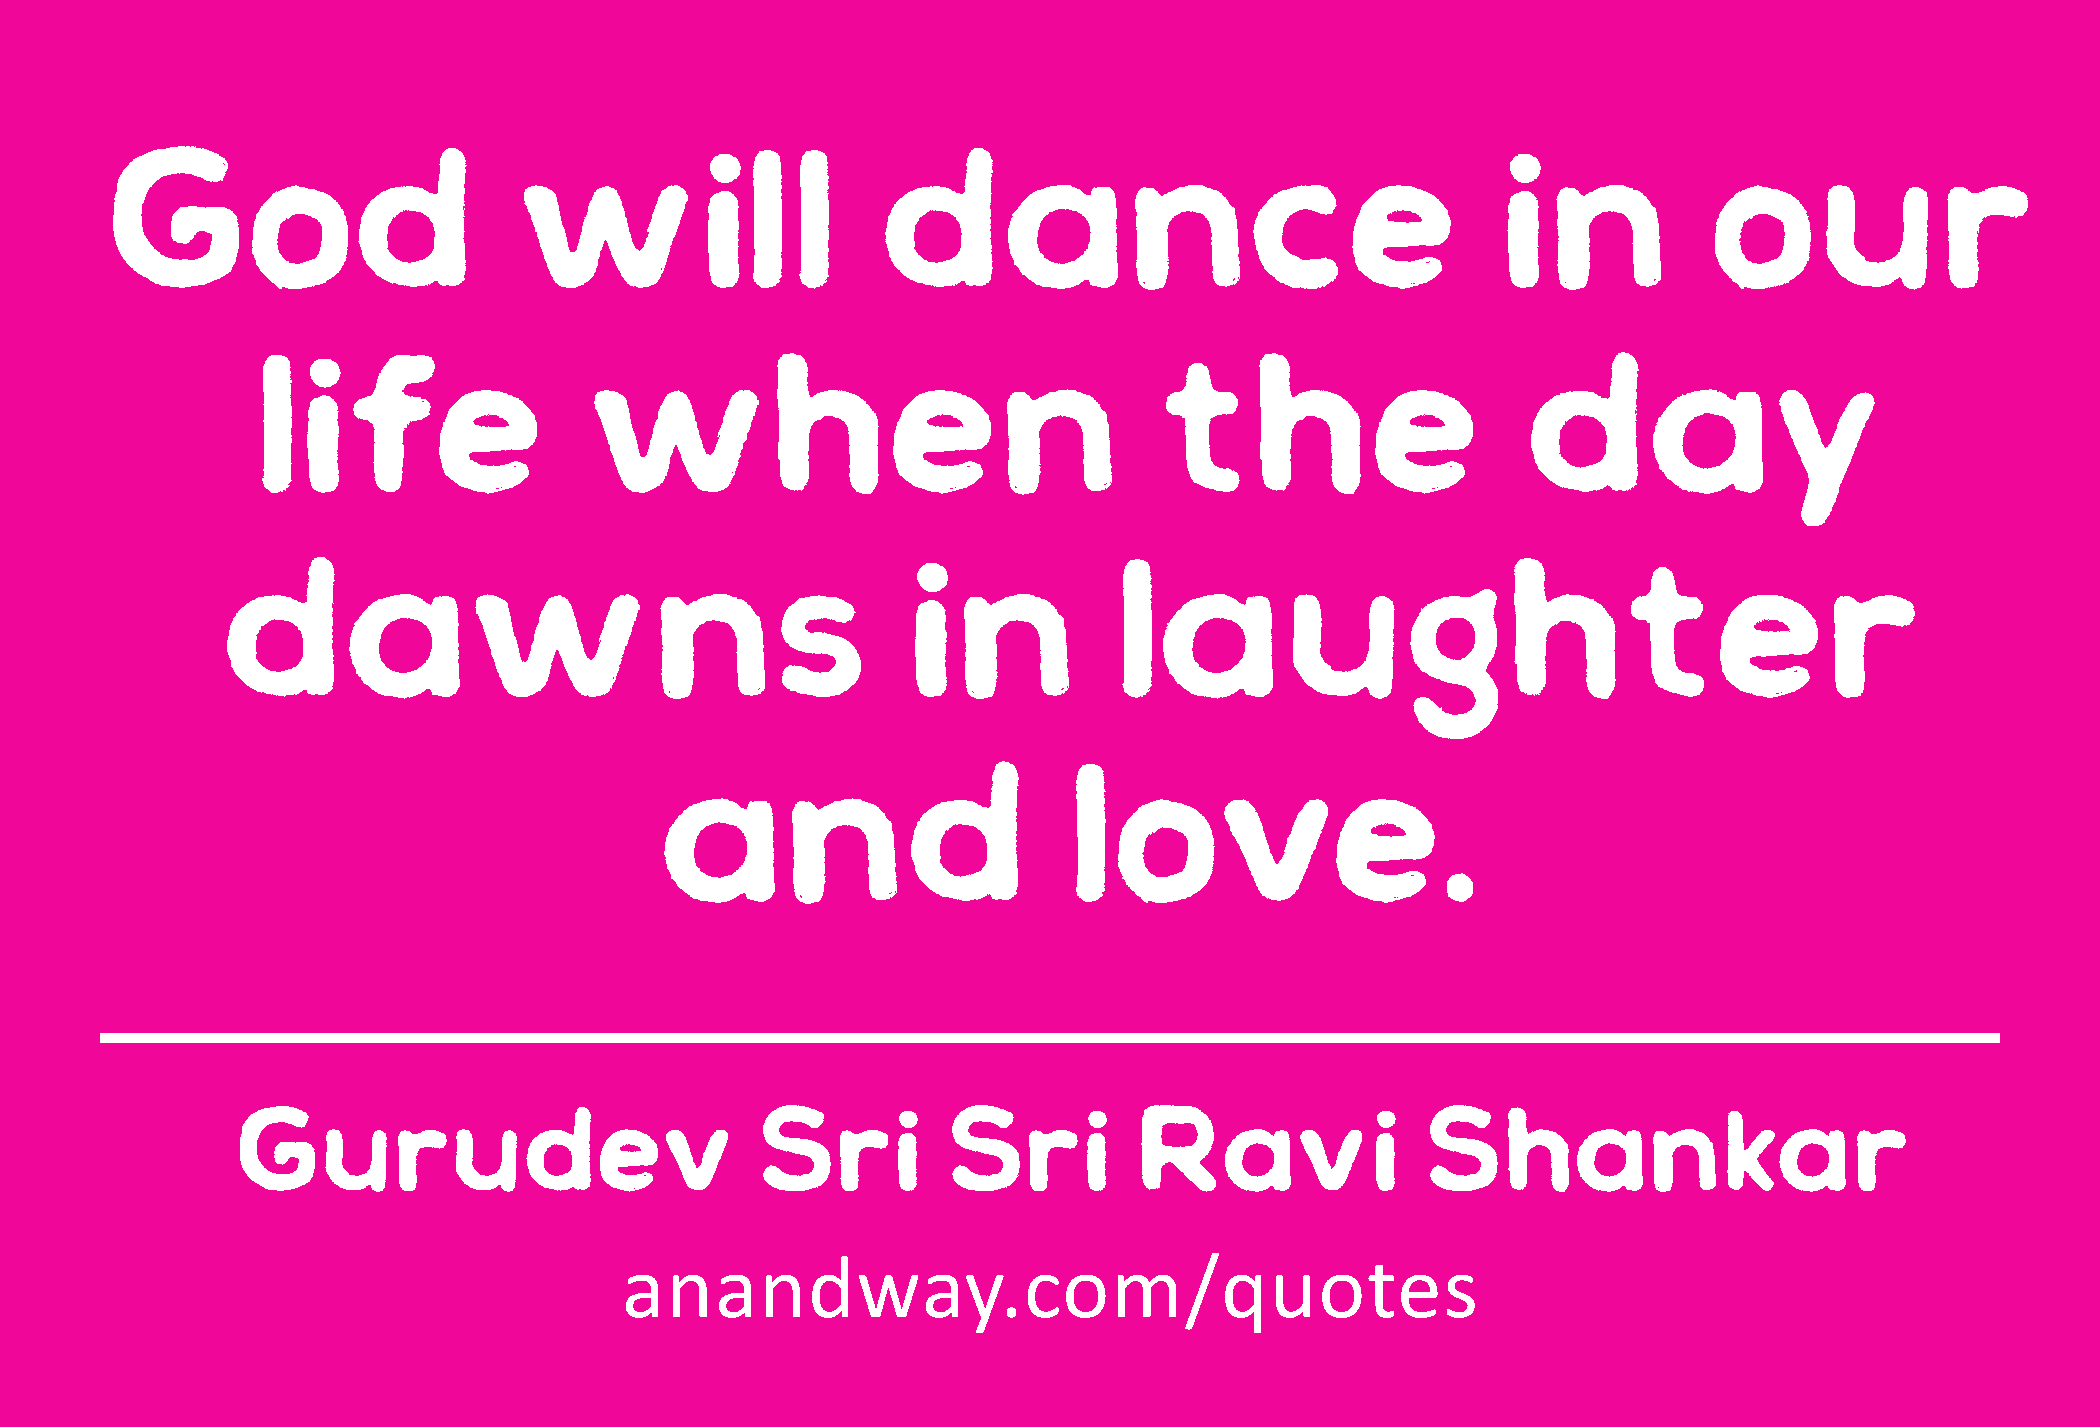 God will dance in our life when the day dawns in laughter and love. 
 -Gurudev Sri Sri Ravi Shankar